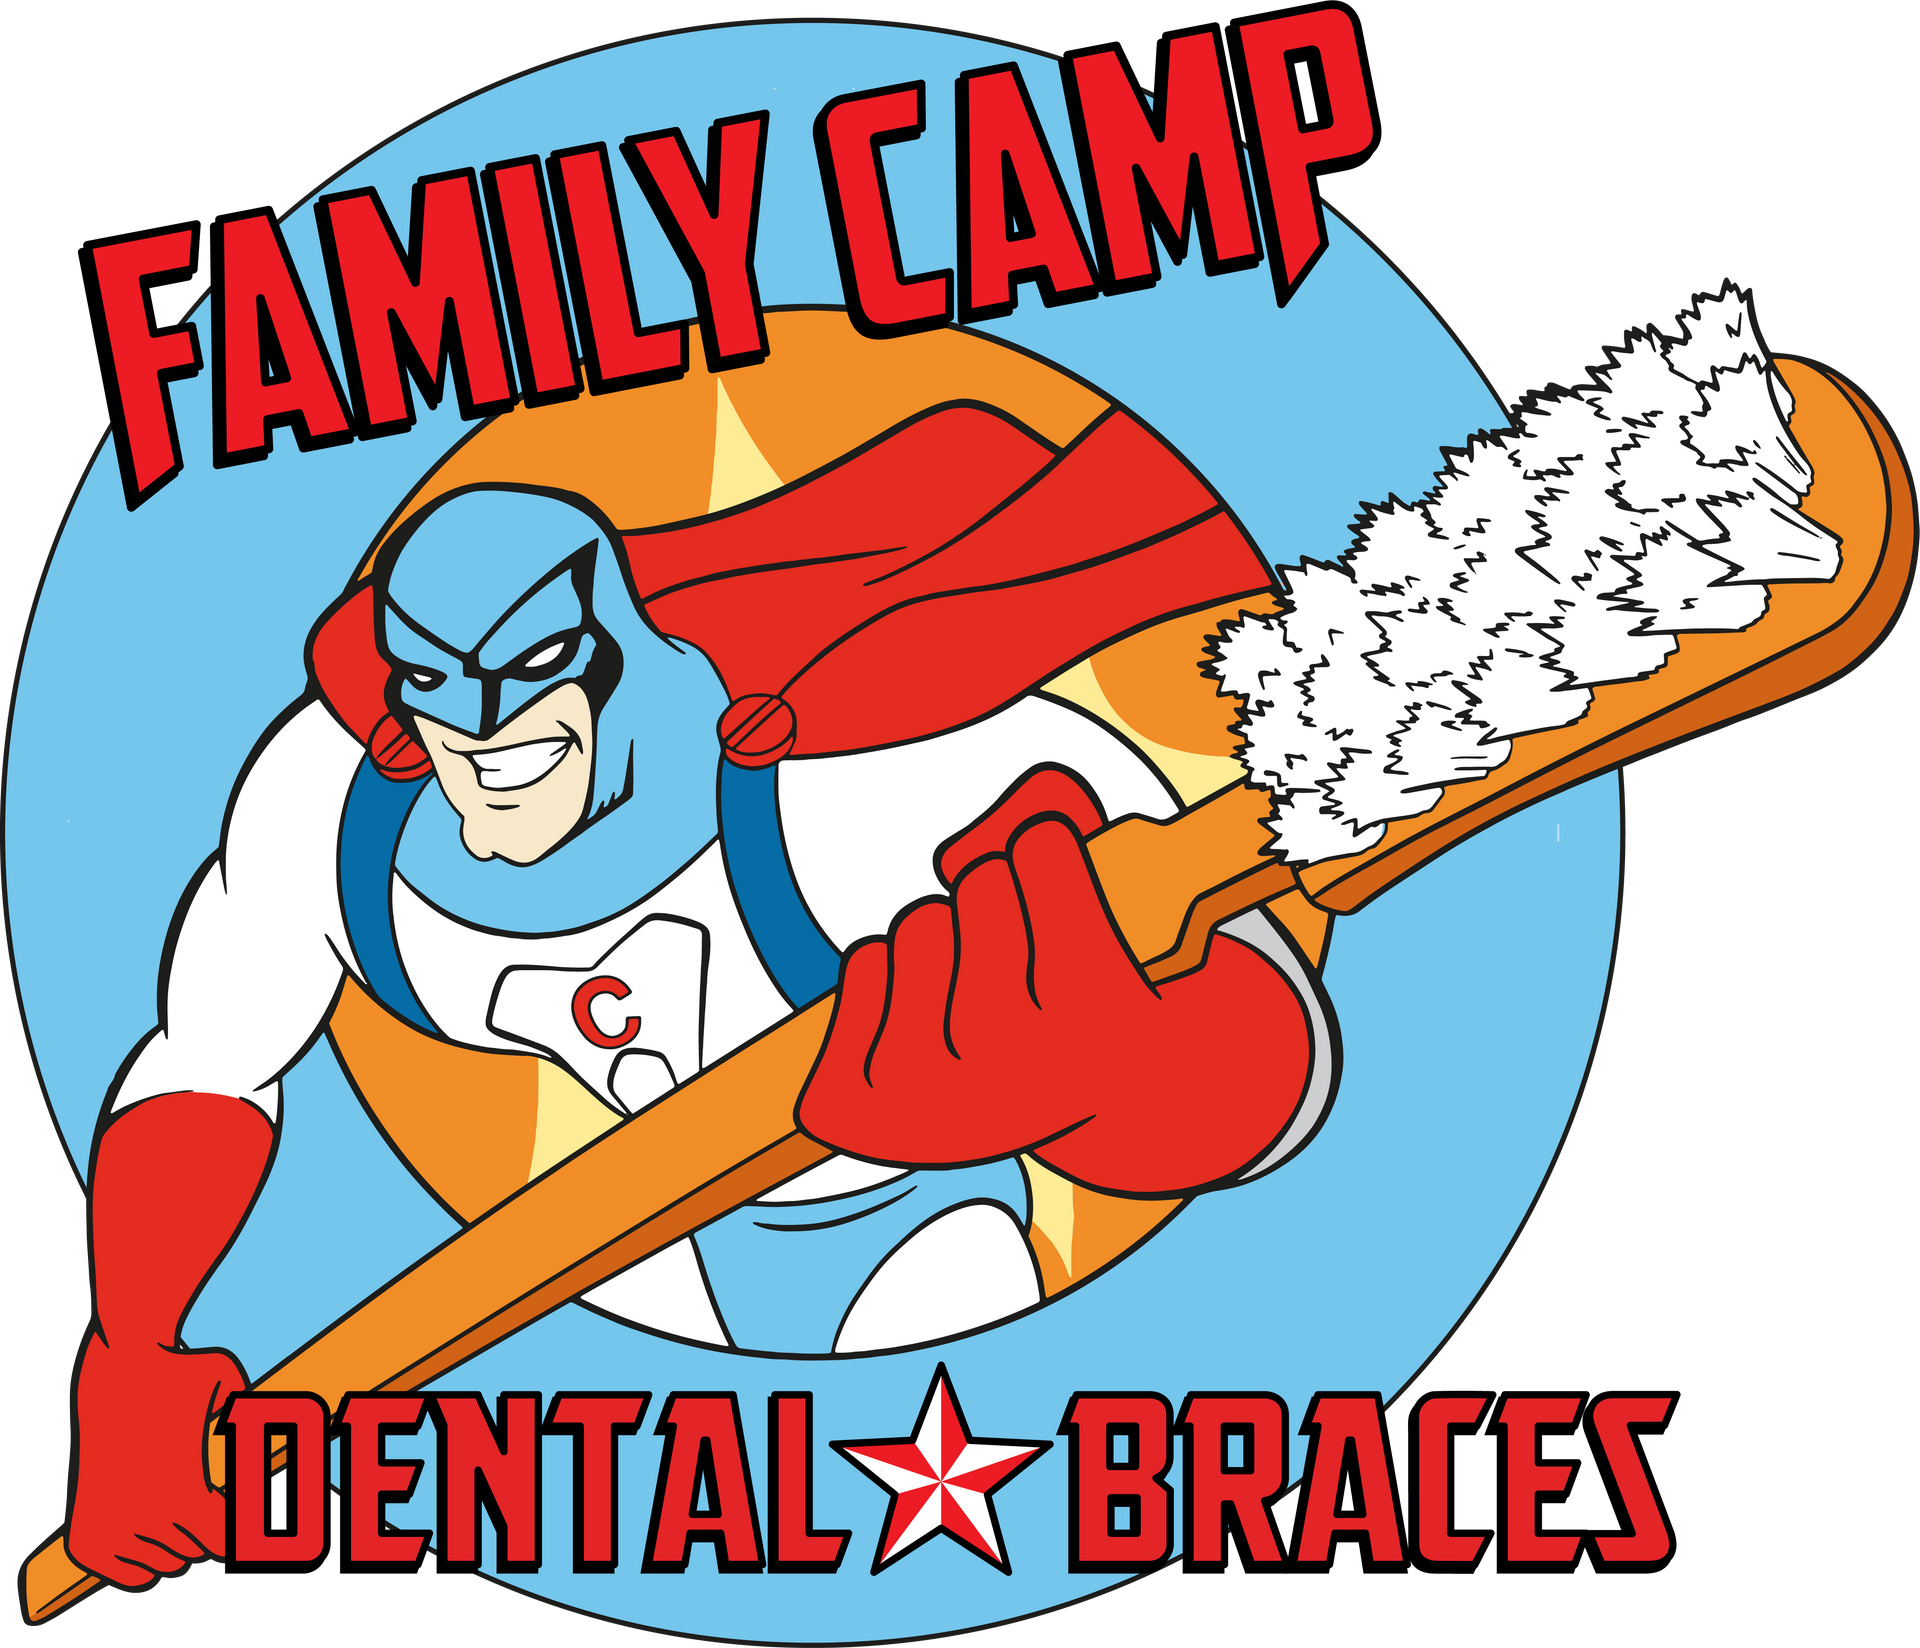 Kids camp dental braces